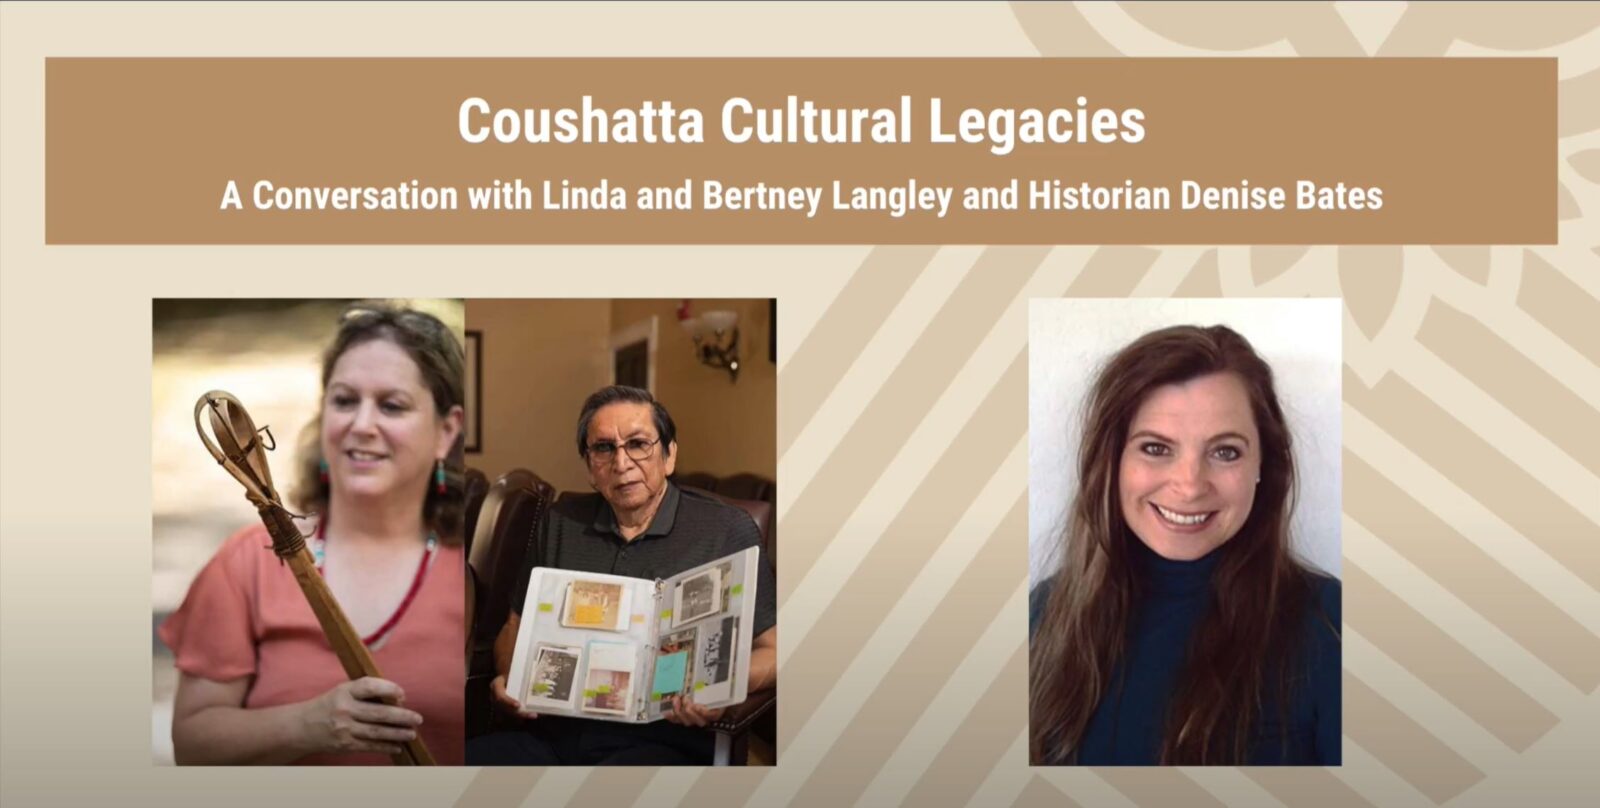 Bright Lights Online: Coushatta Cultural Legacies